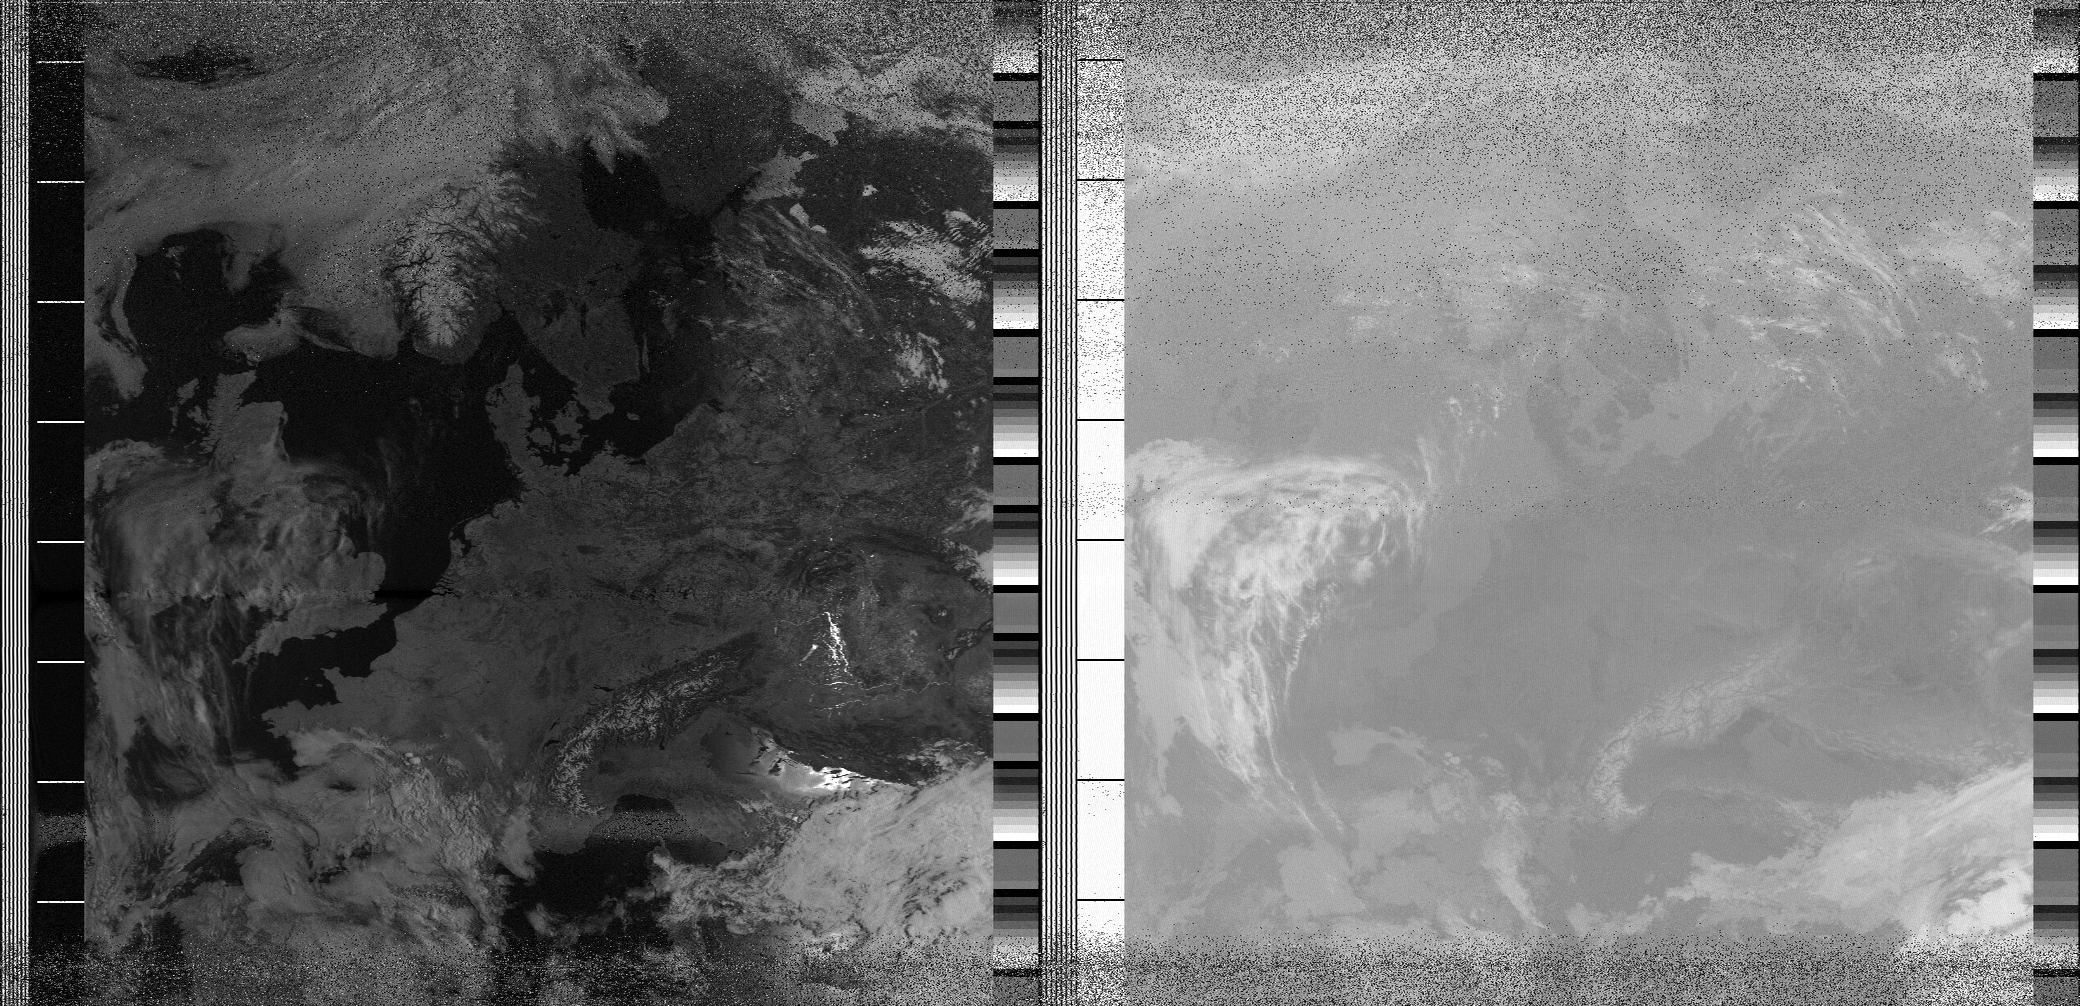 NOAA-15 weather satellite image